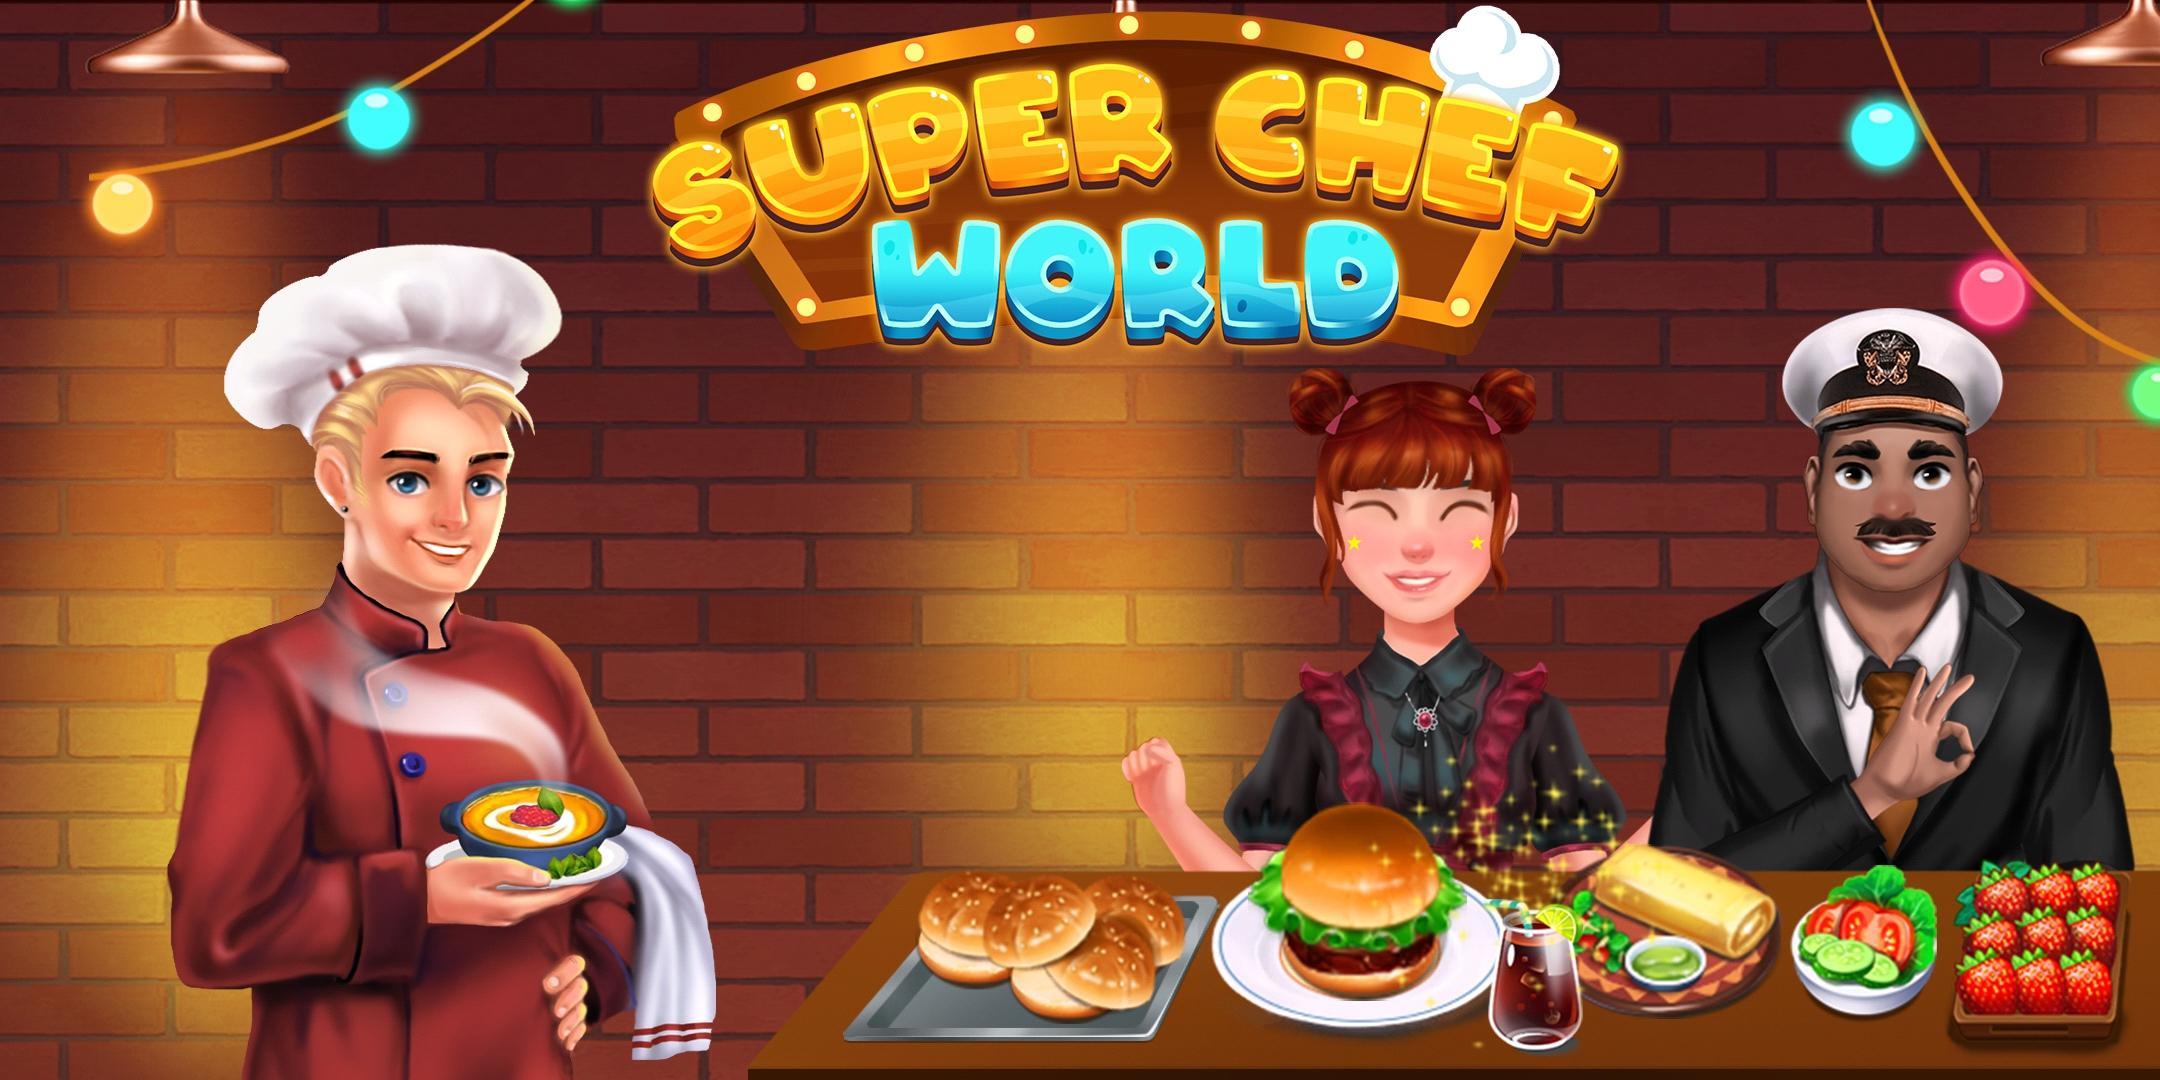 Screenshot 1 of Super chef mundial 1.1.9